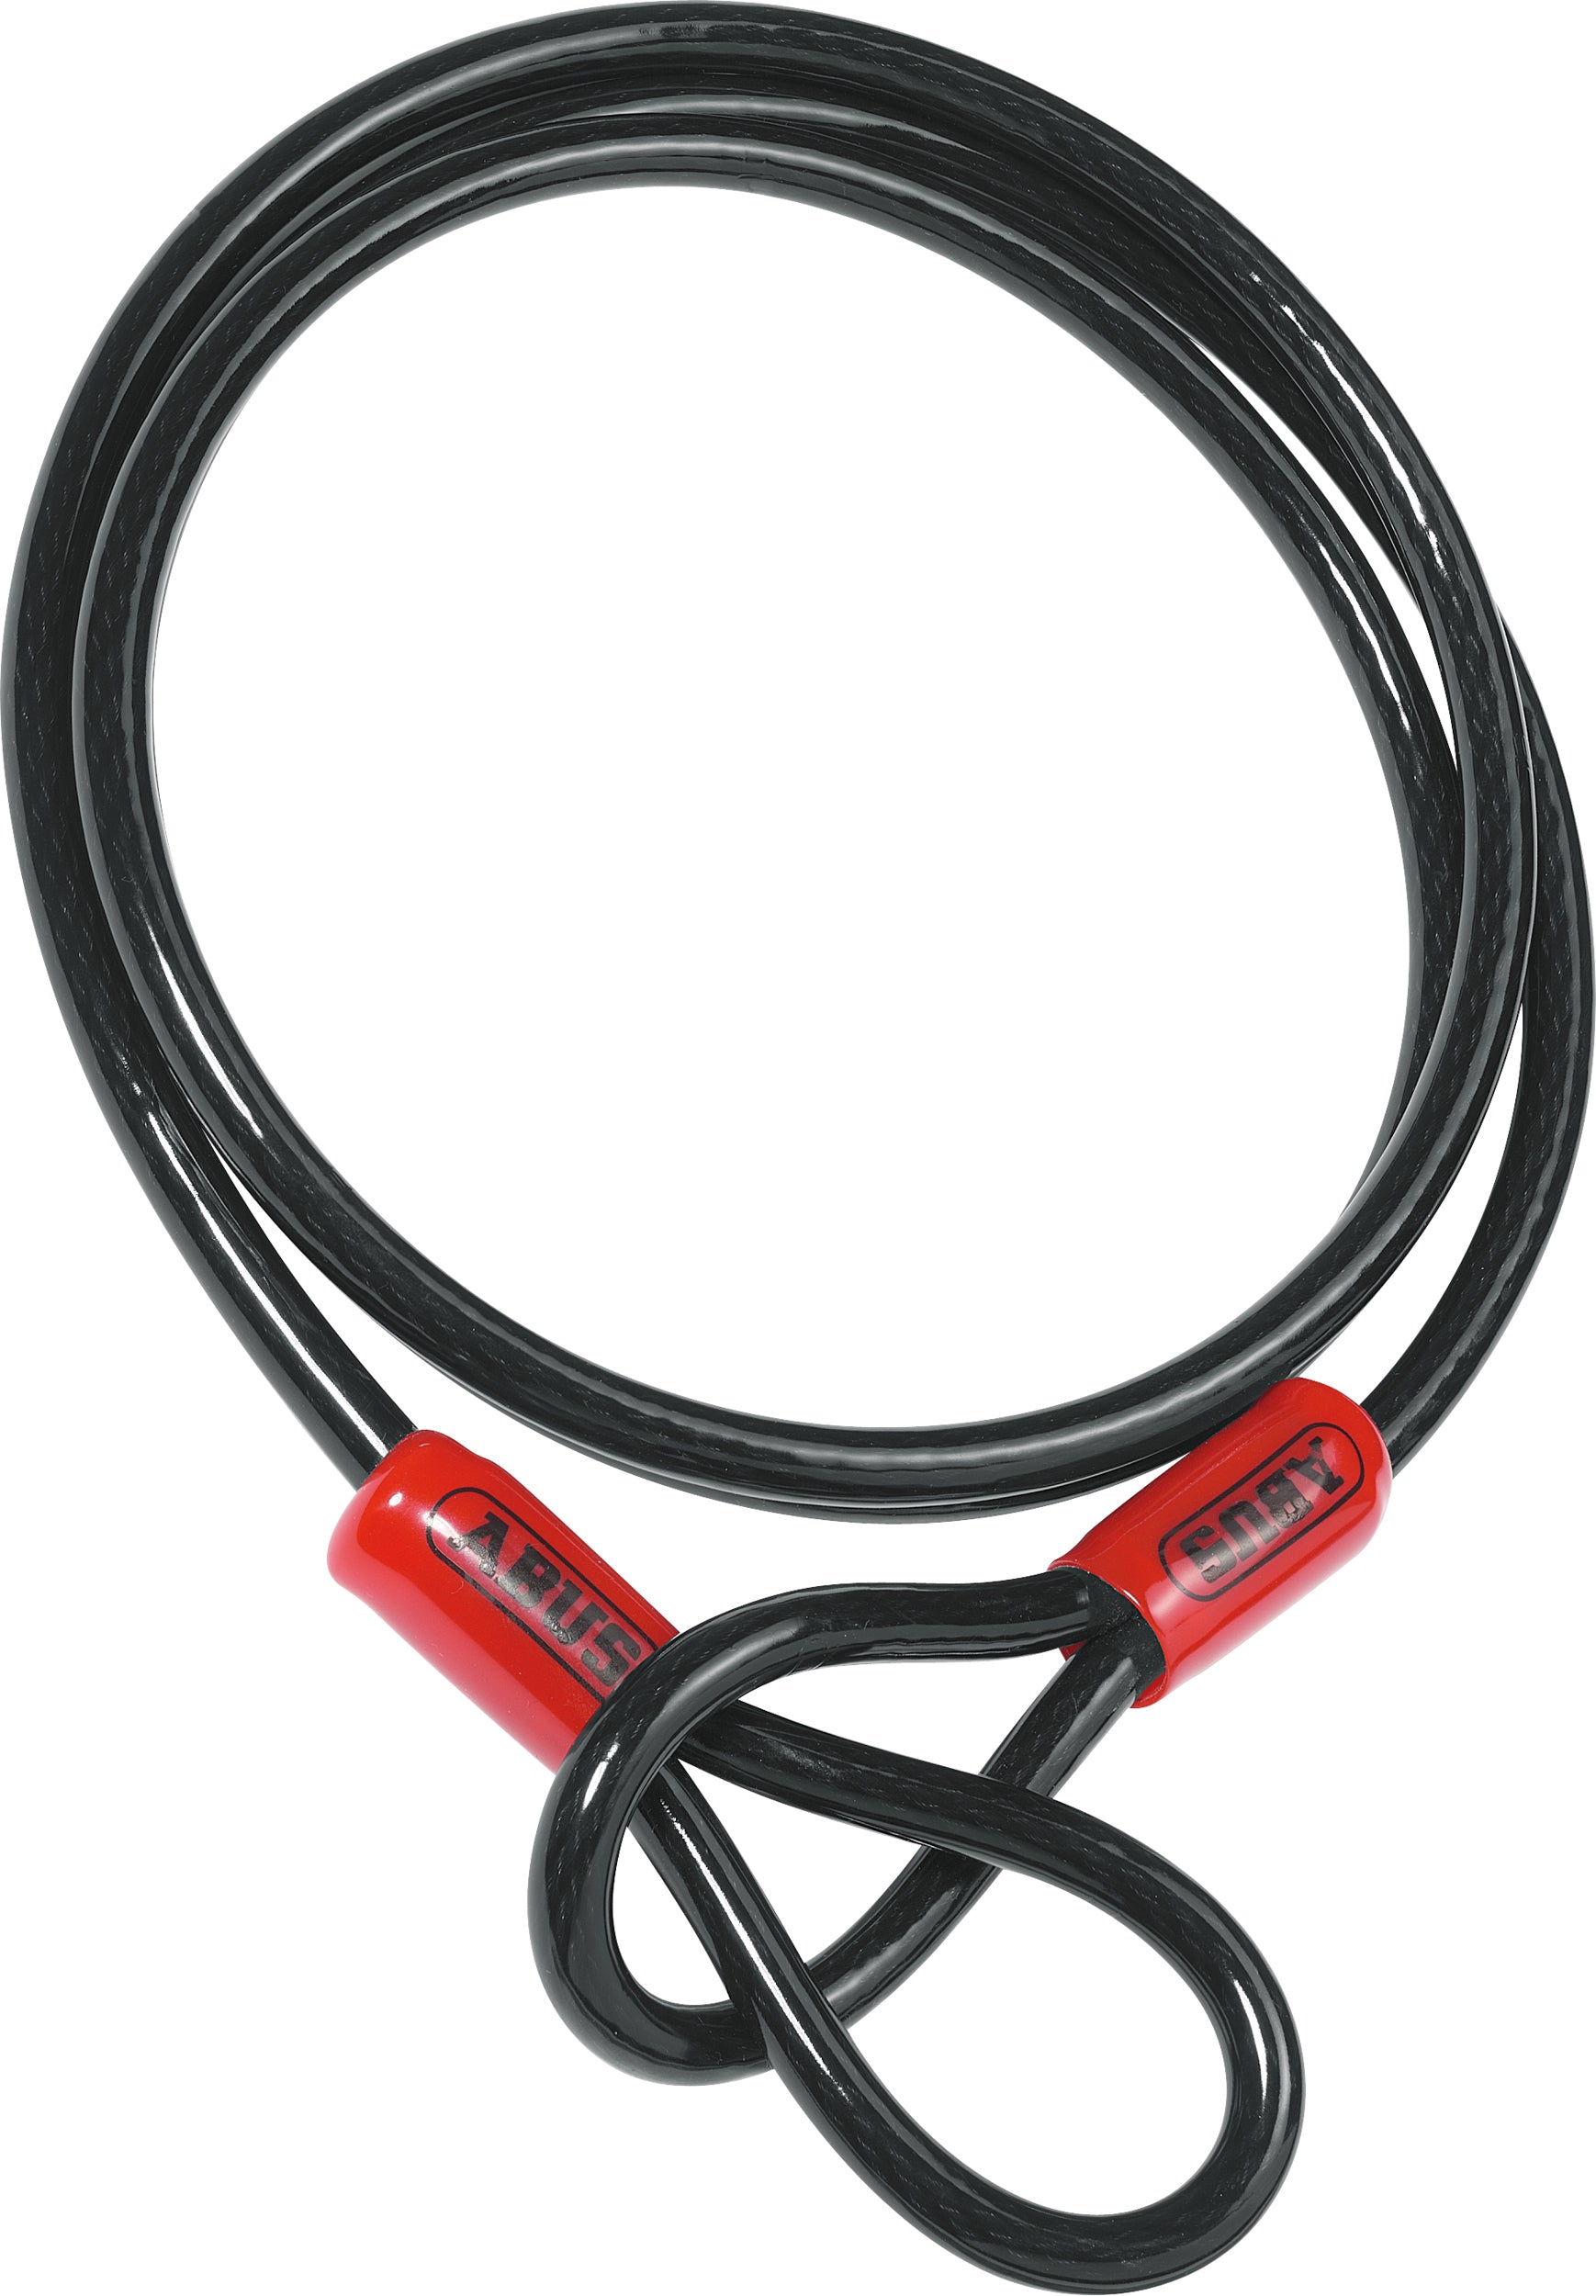 Cobra Loop Cable 7ft